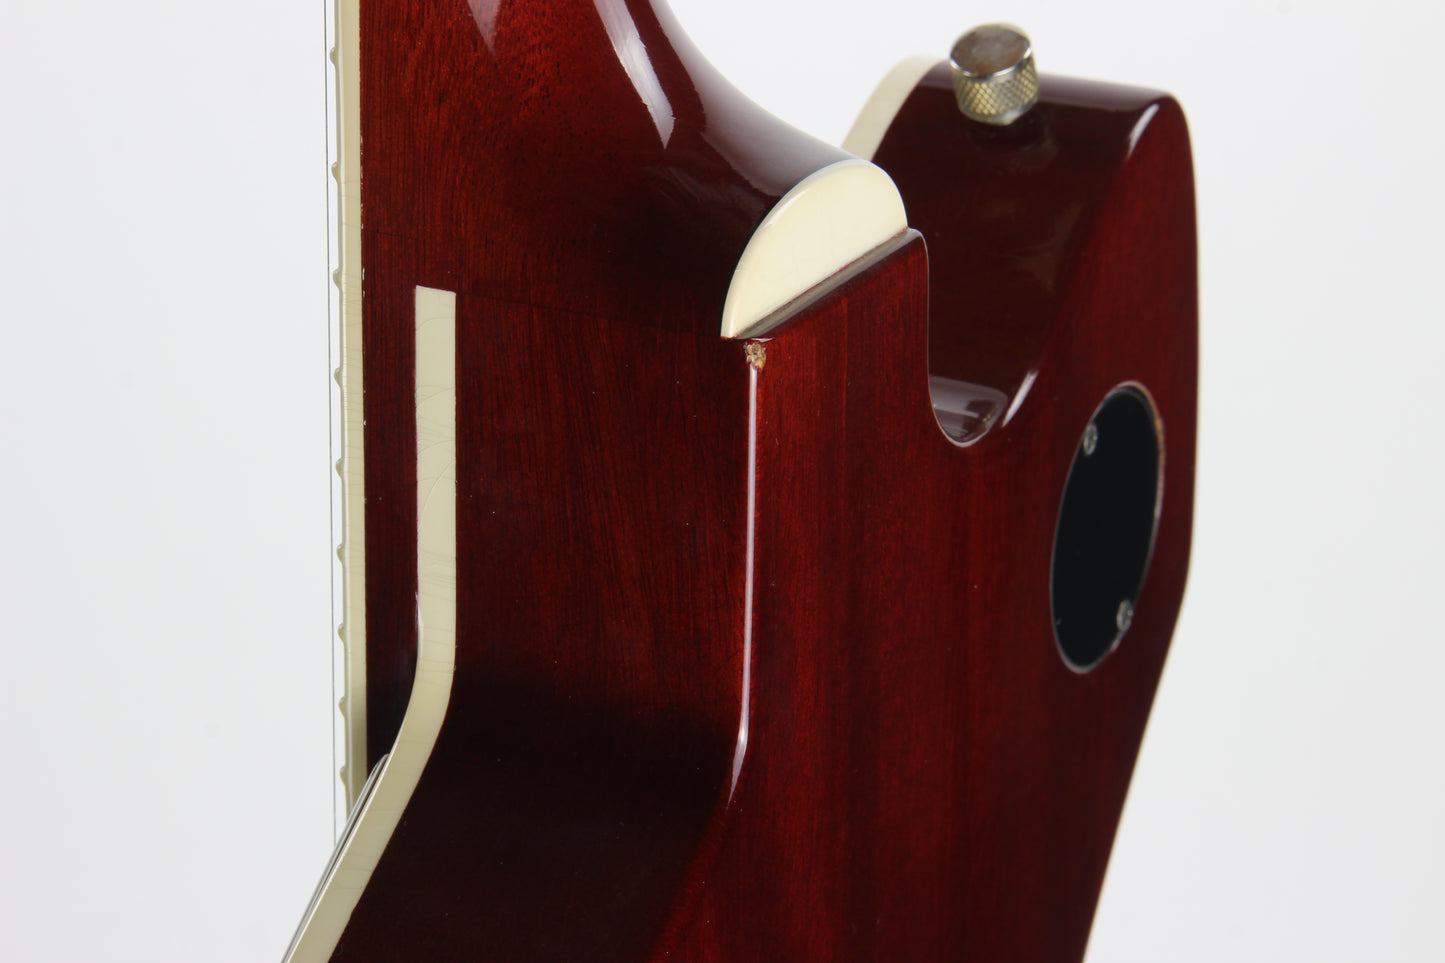 Gretsch Custom Shop Masterbuilt Red Aniline Caddy Billy Bo Relic Brazilian Rosewood G6199 ThroBaks Stephen Stern Fender